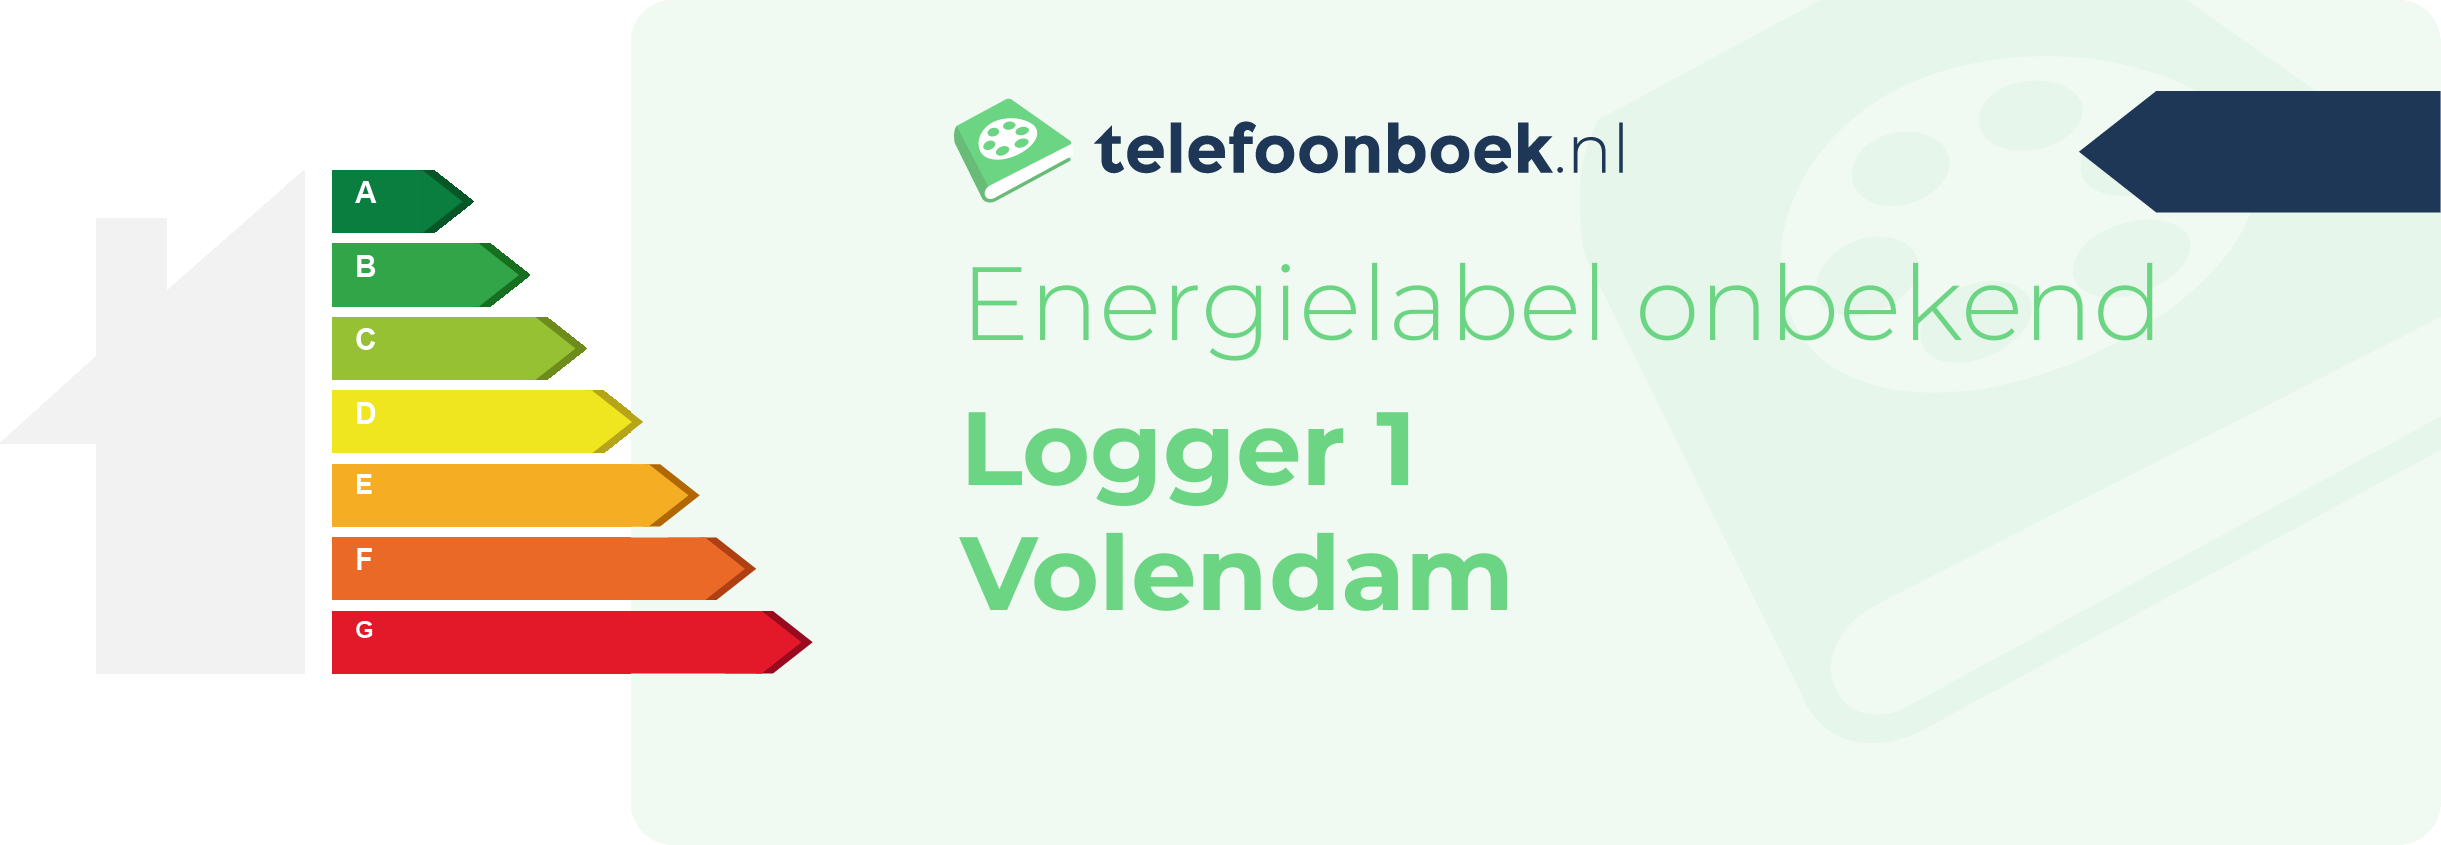 Energielabel Logger 1 Volendam